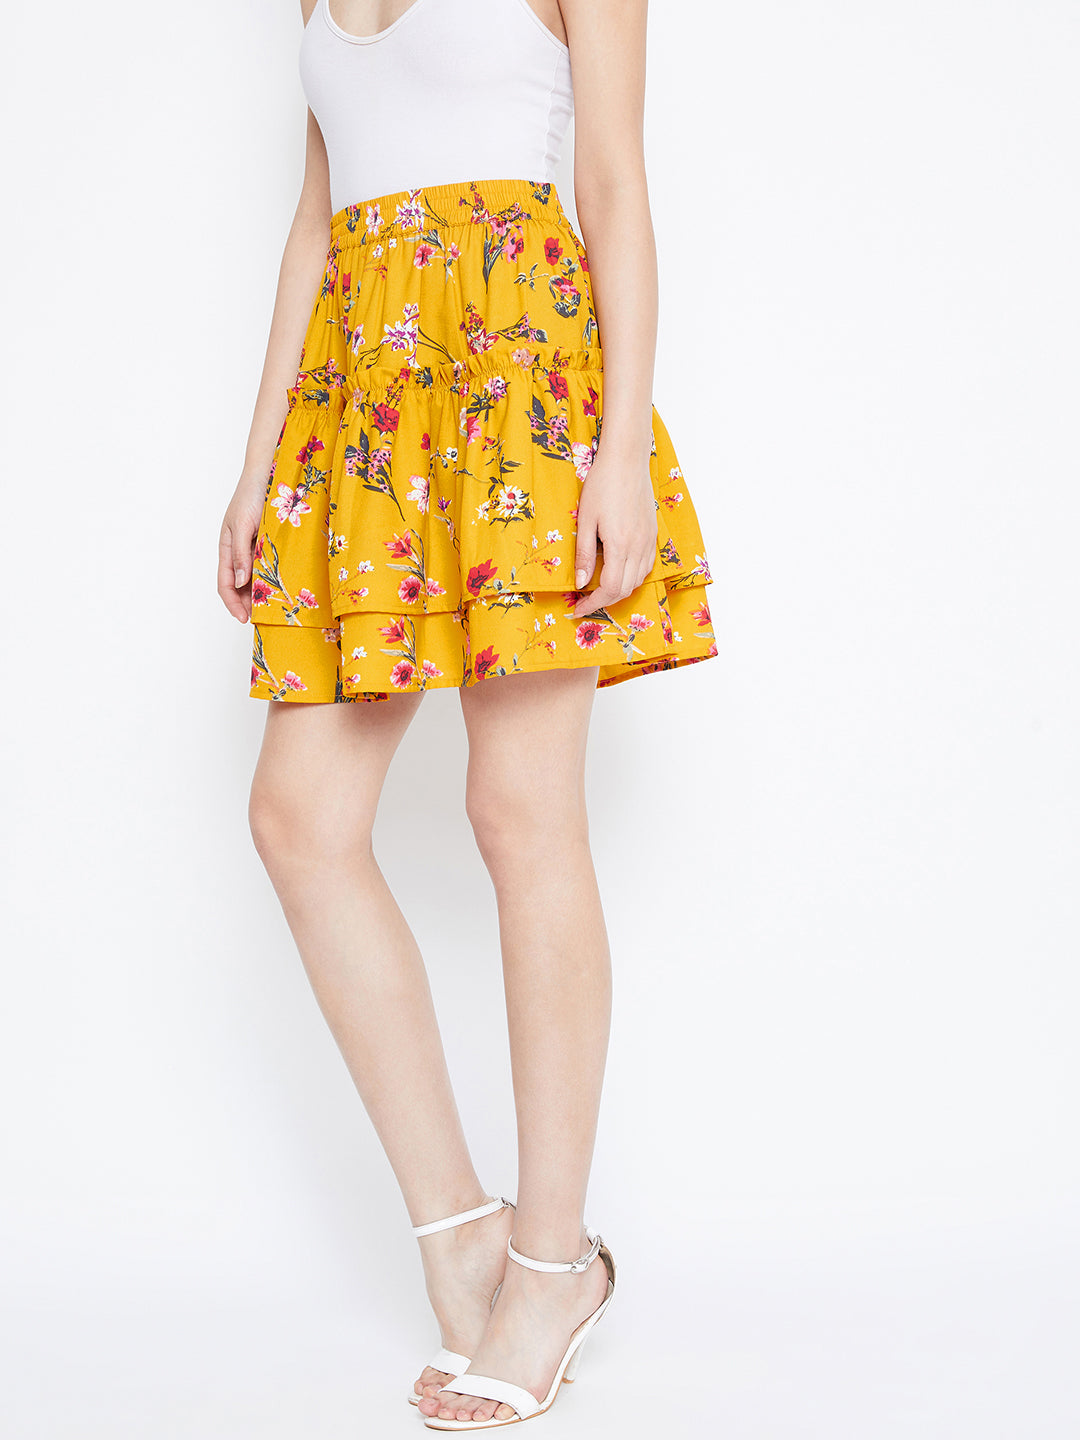 Yellow Skirt Print Berrylush Women Layered Slip-On Mini Floral